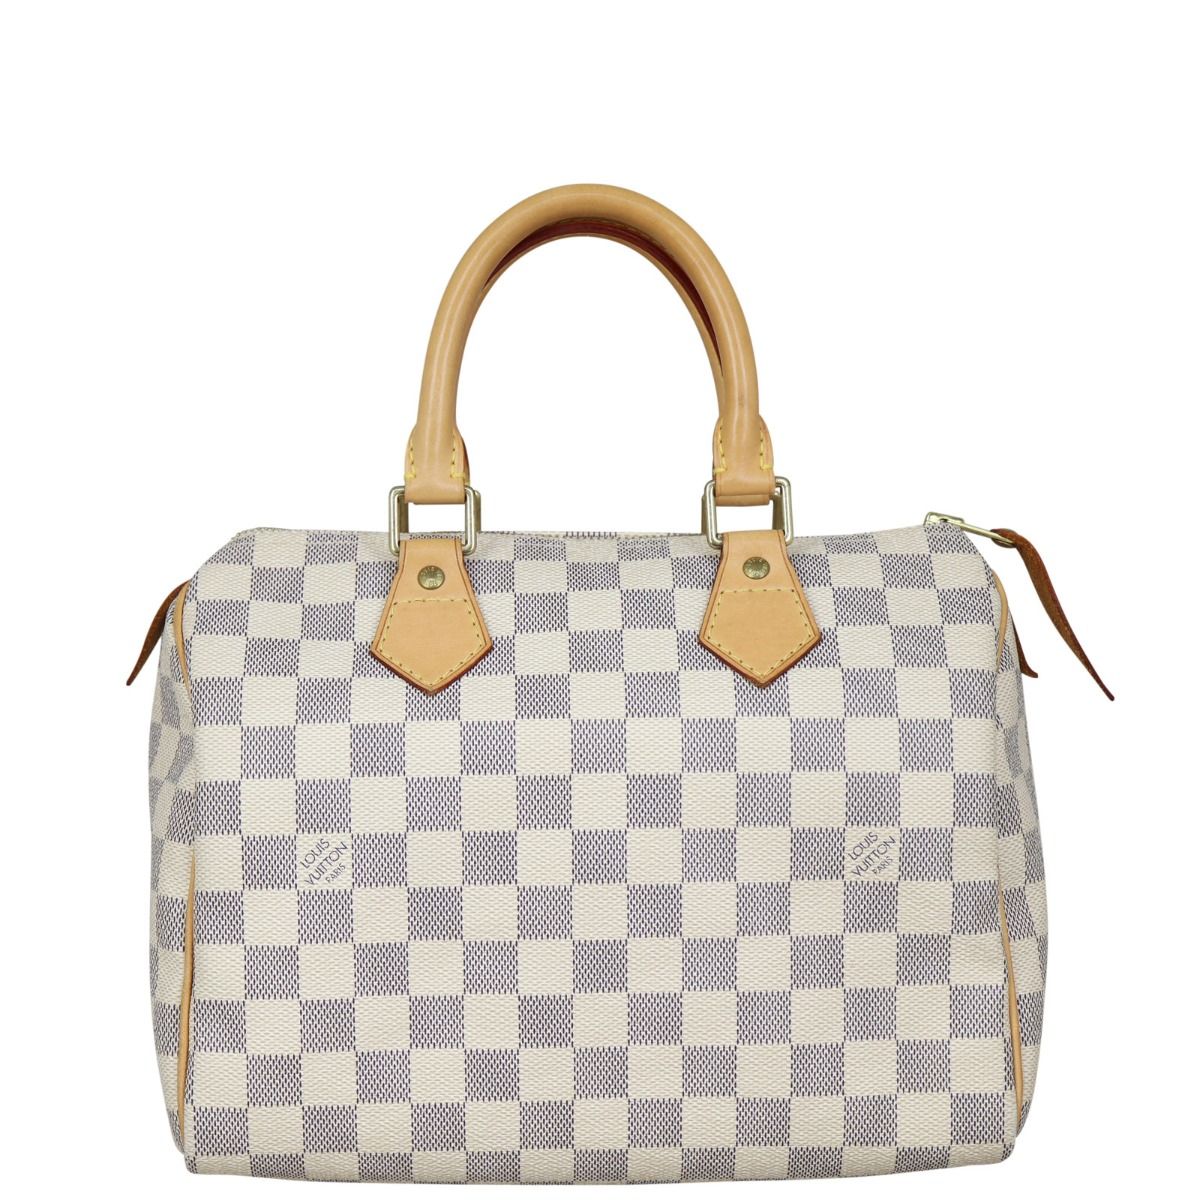 PreOwned Louis Vuitton Speedy 25 Bag 2159401  Rebag